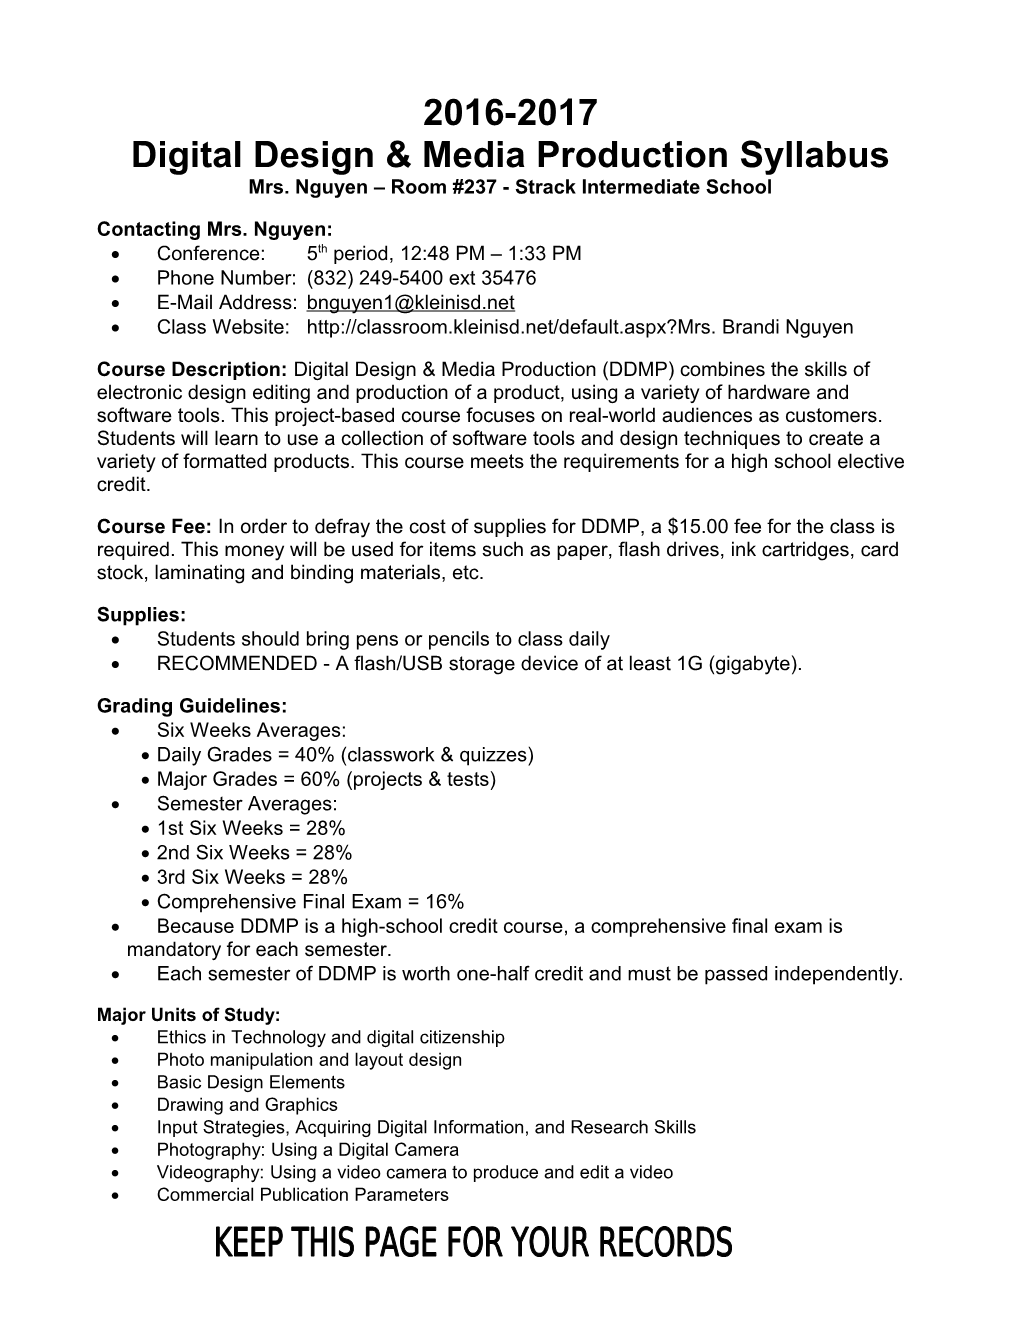 2006-2007 Desktop Publishing Syllabus